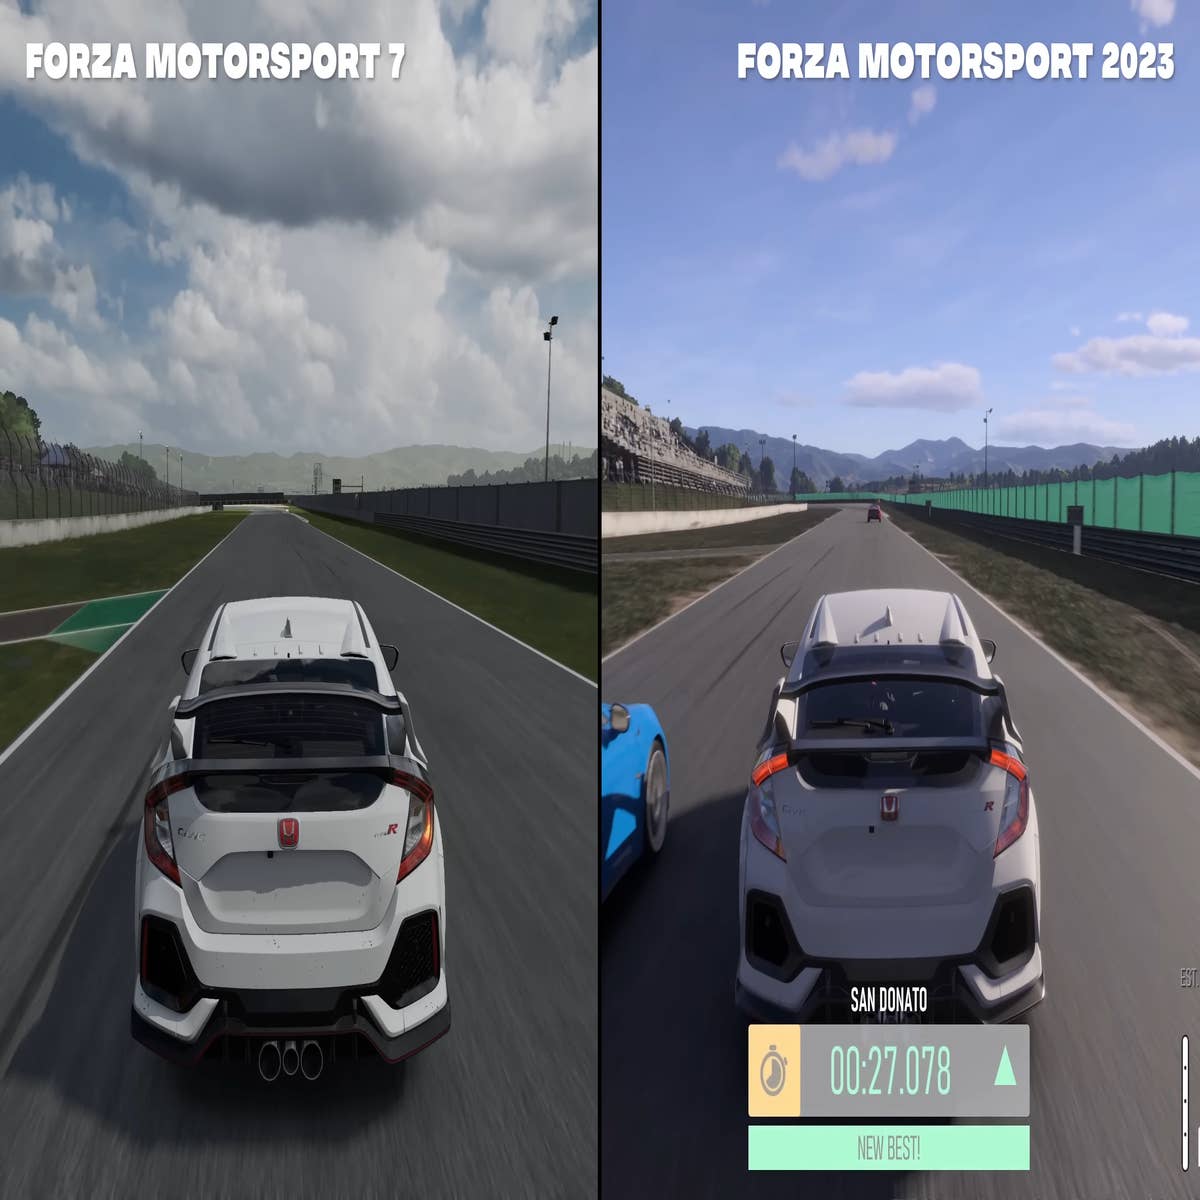 How Forza Motorsport 4 built Forza Motorsport 5 (preview)